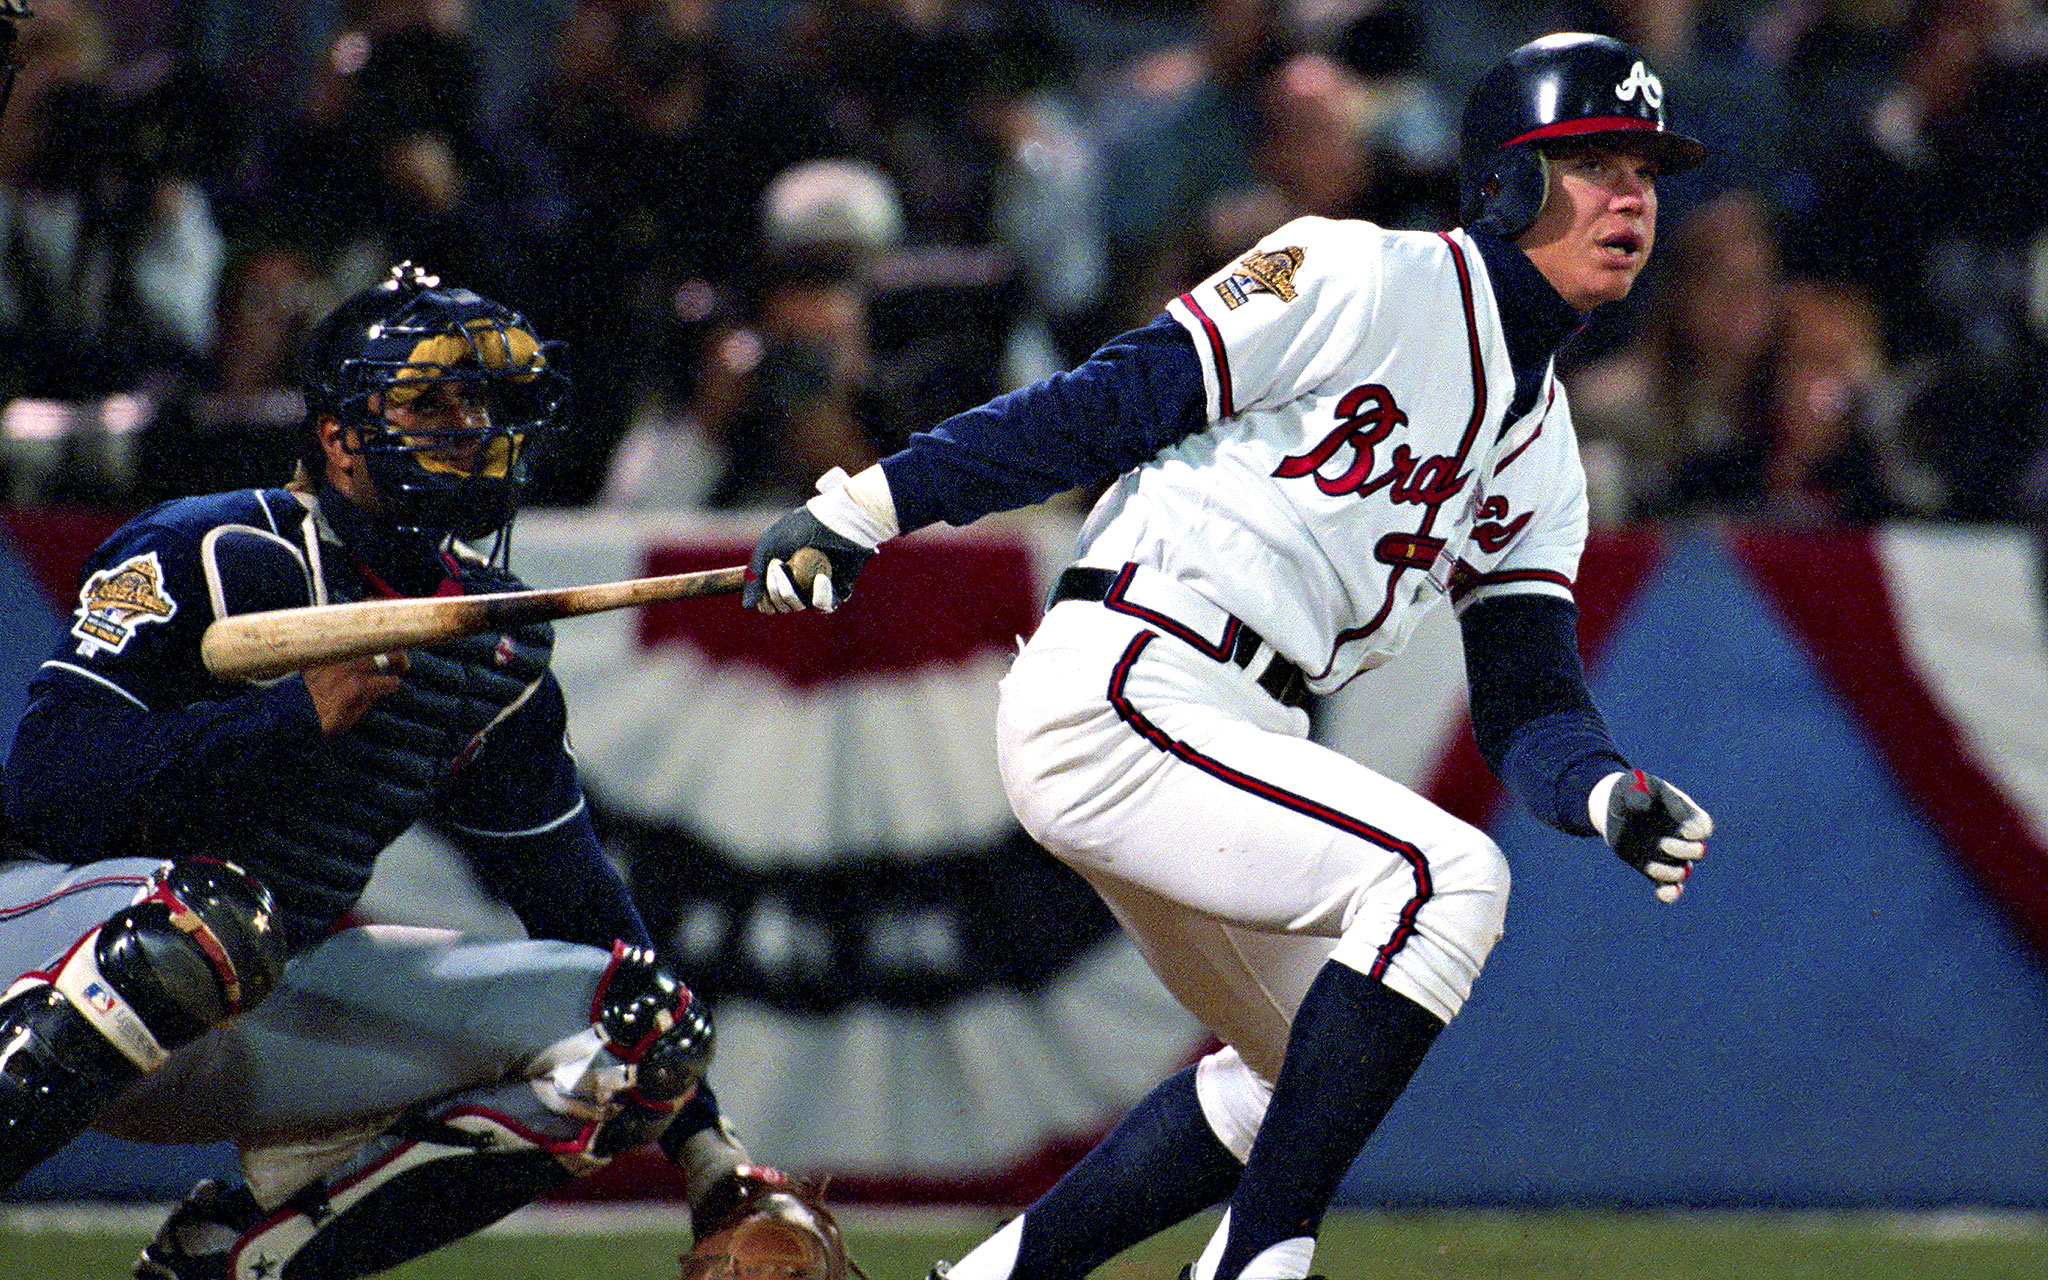 Game 4 — 1995 World Series — Wednesday, October 25, 1995 — Braves win 5-2